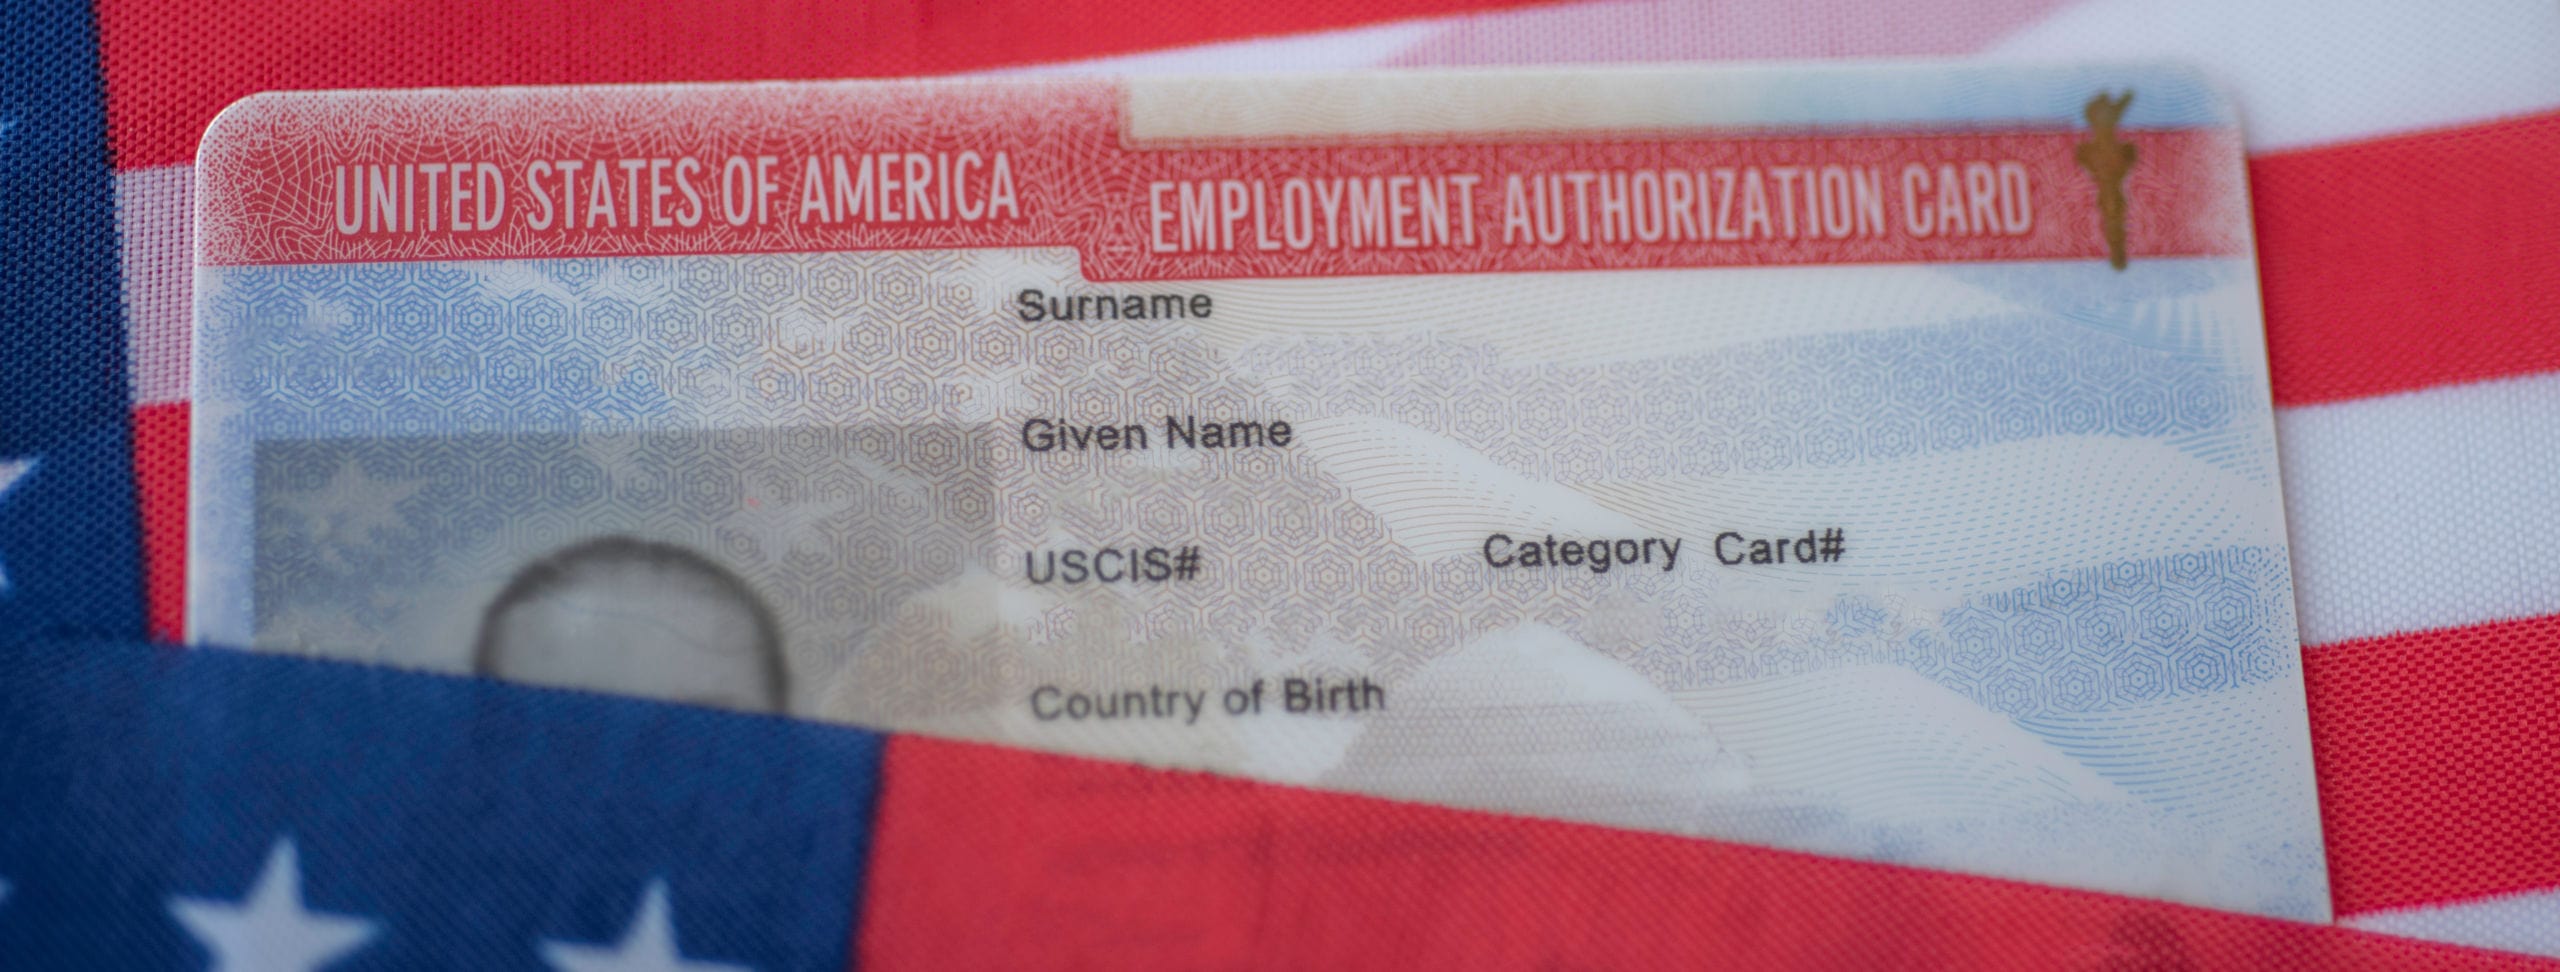 an employment authorization card